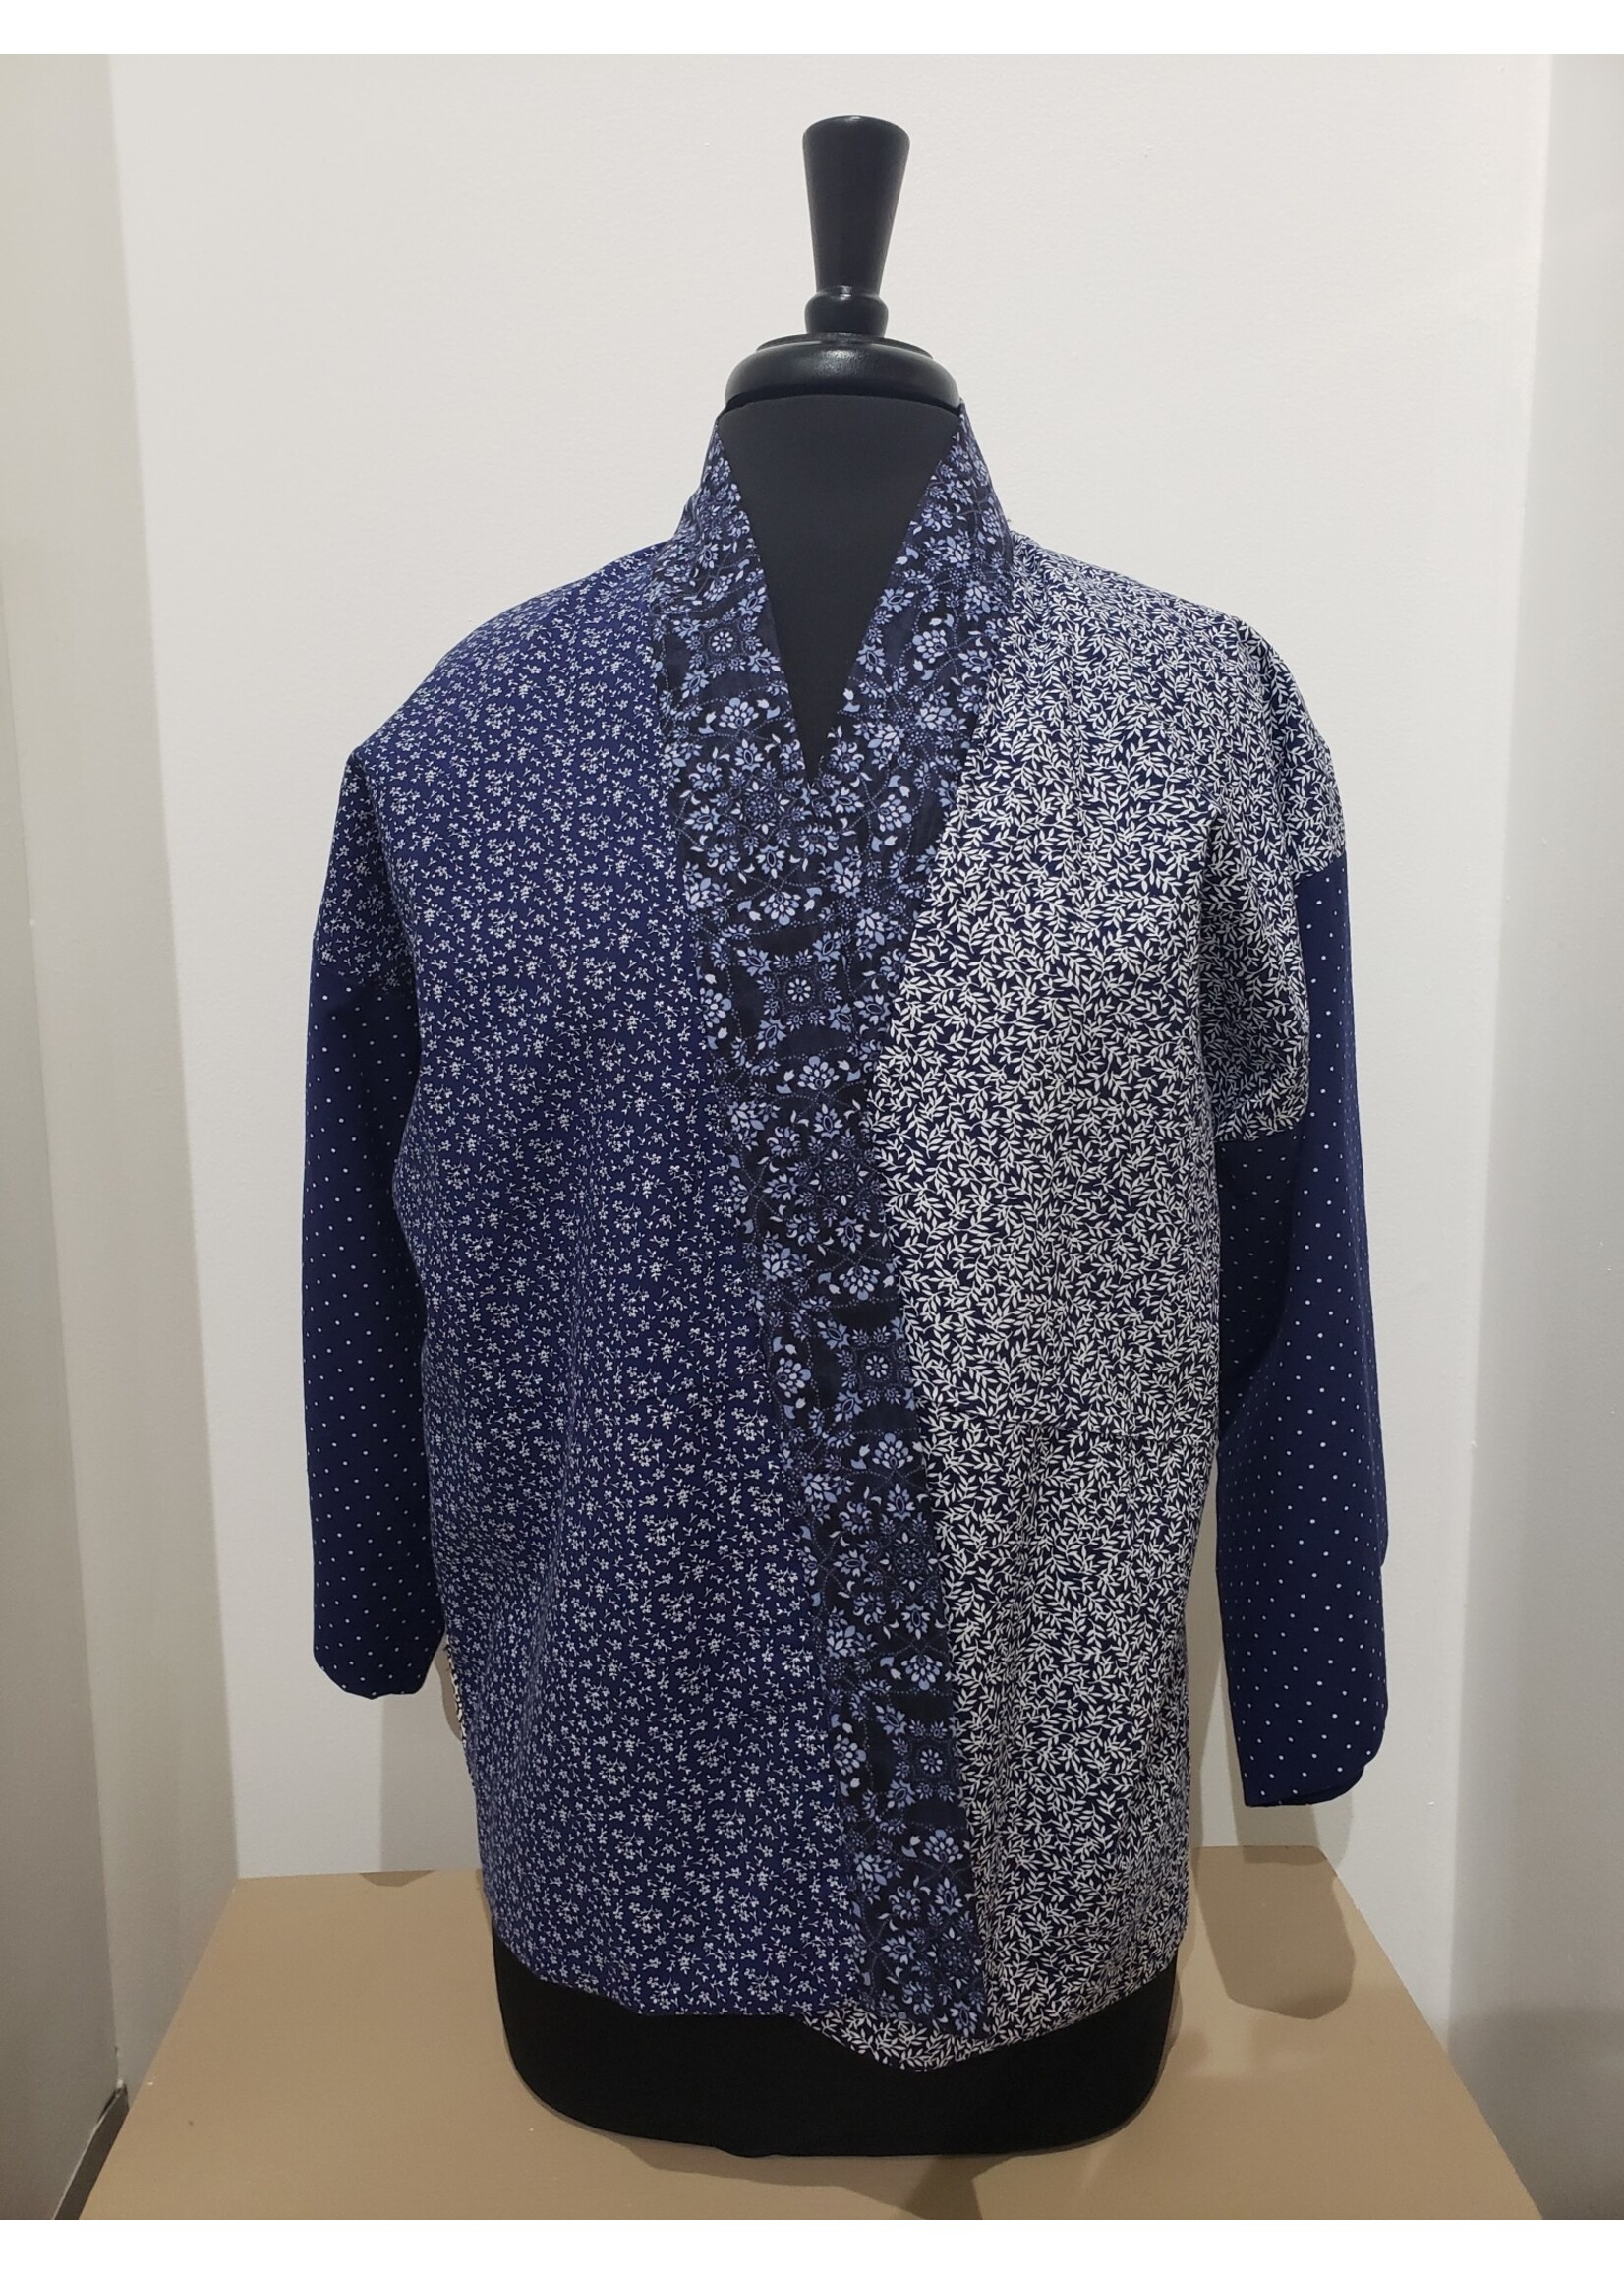 Priscilla Stultz Blue kimono jacket size m